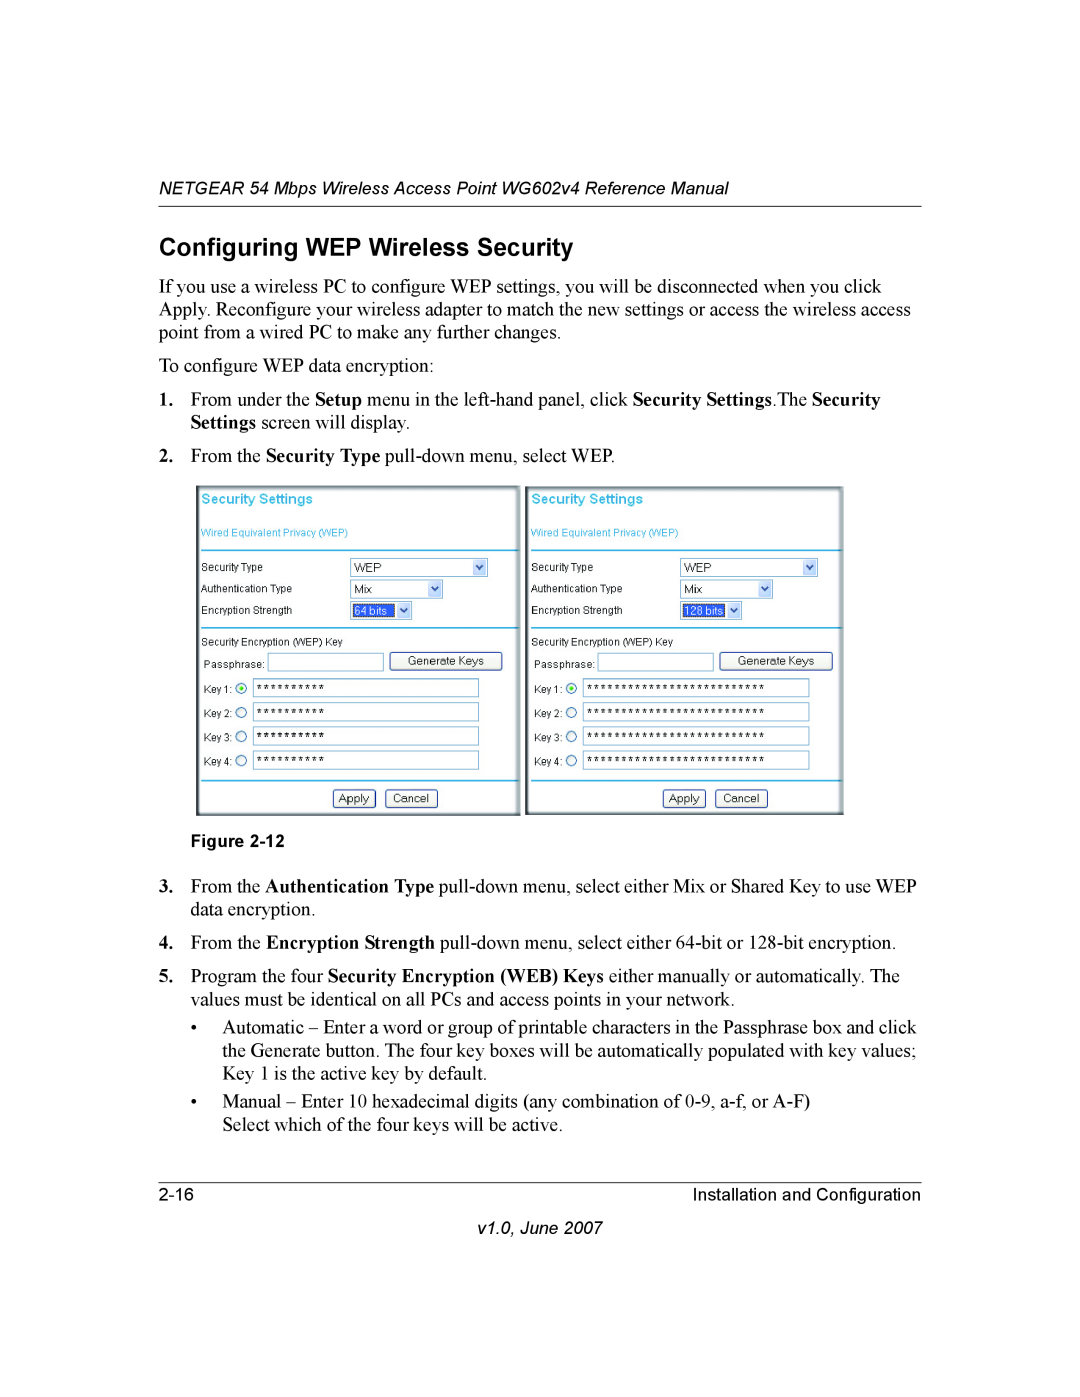 NETGEAR WG602V4 manual Configuring WEP Wireless Security 